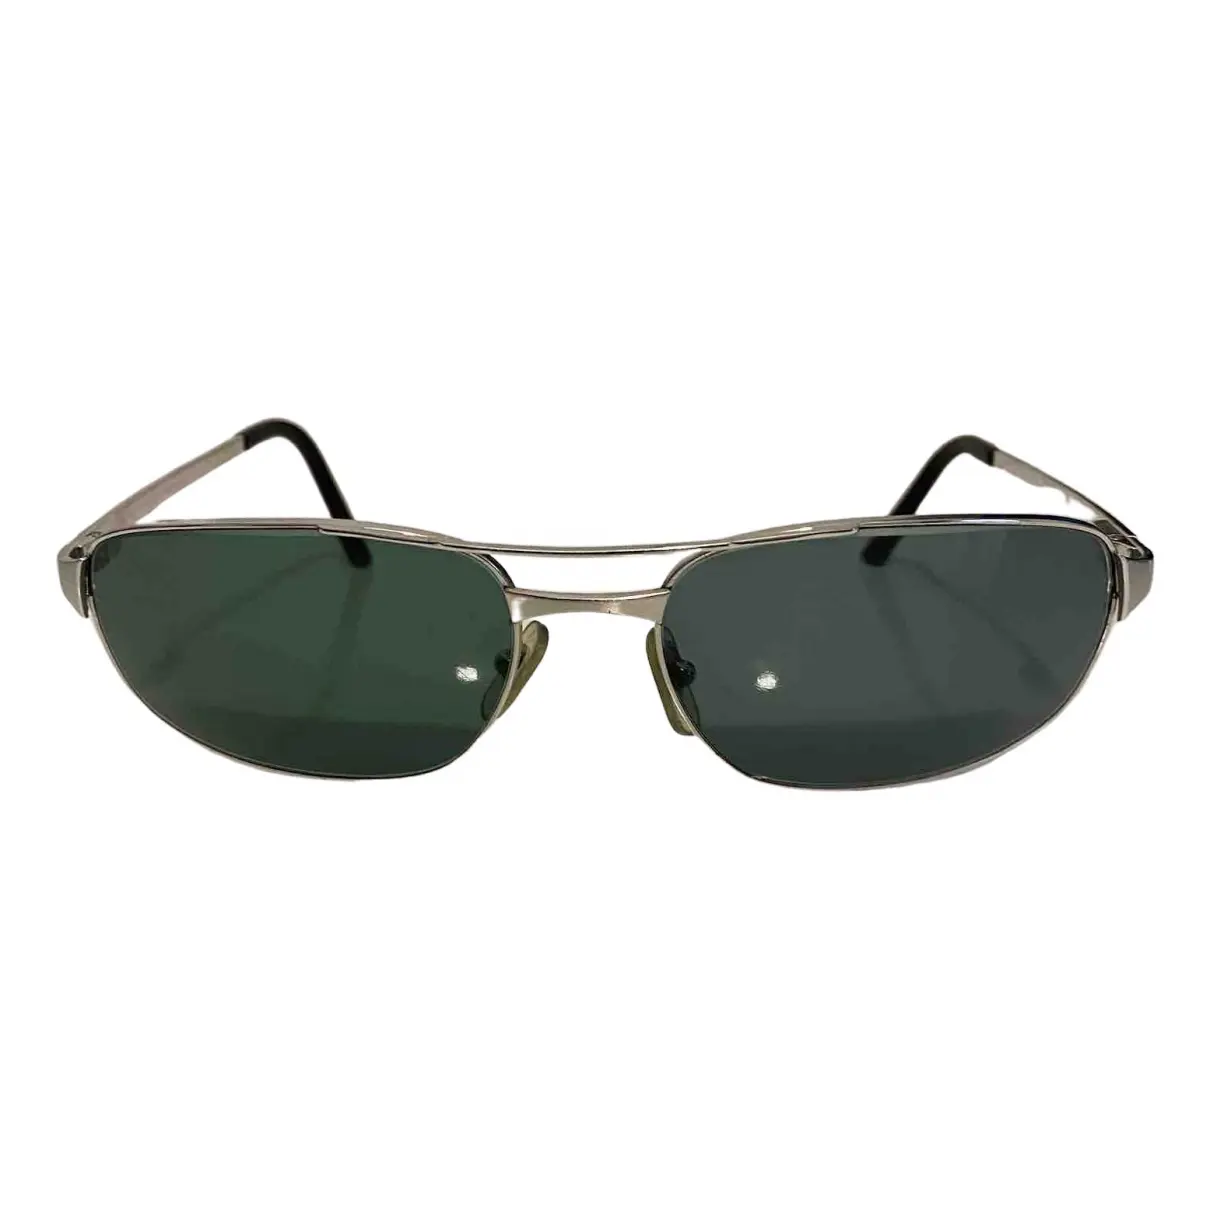 Buy Cartier Santos sunglasses online